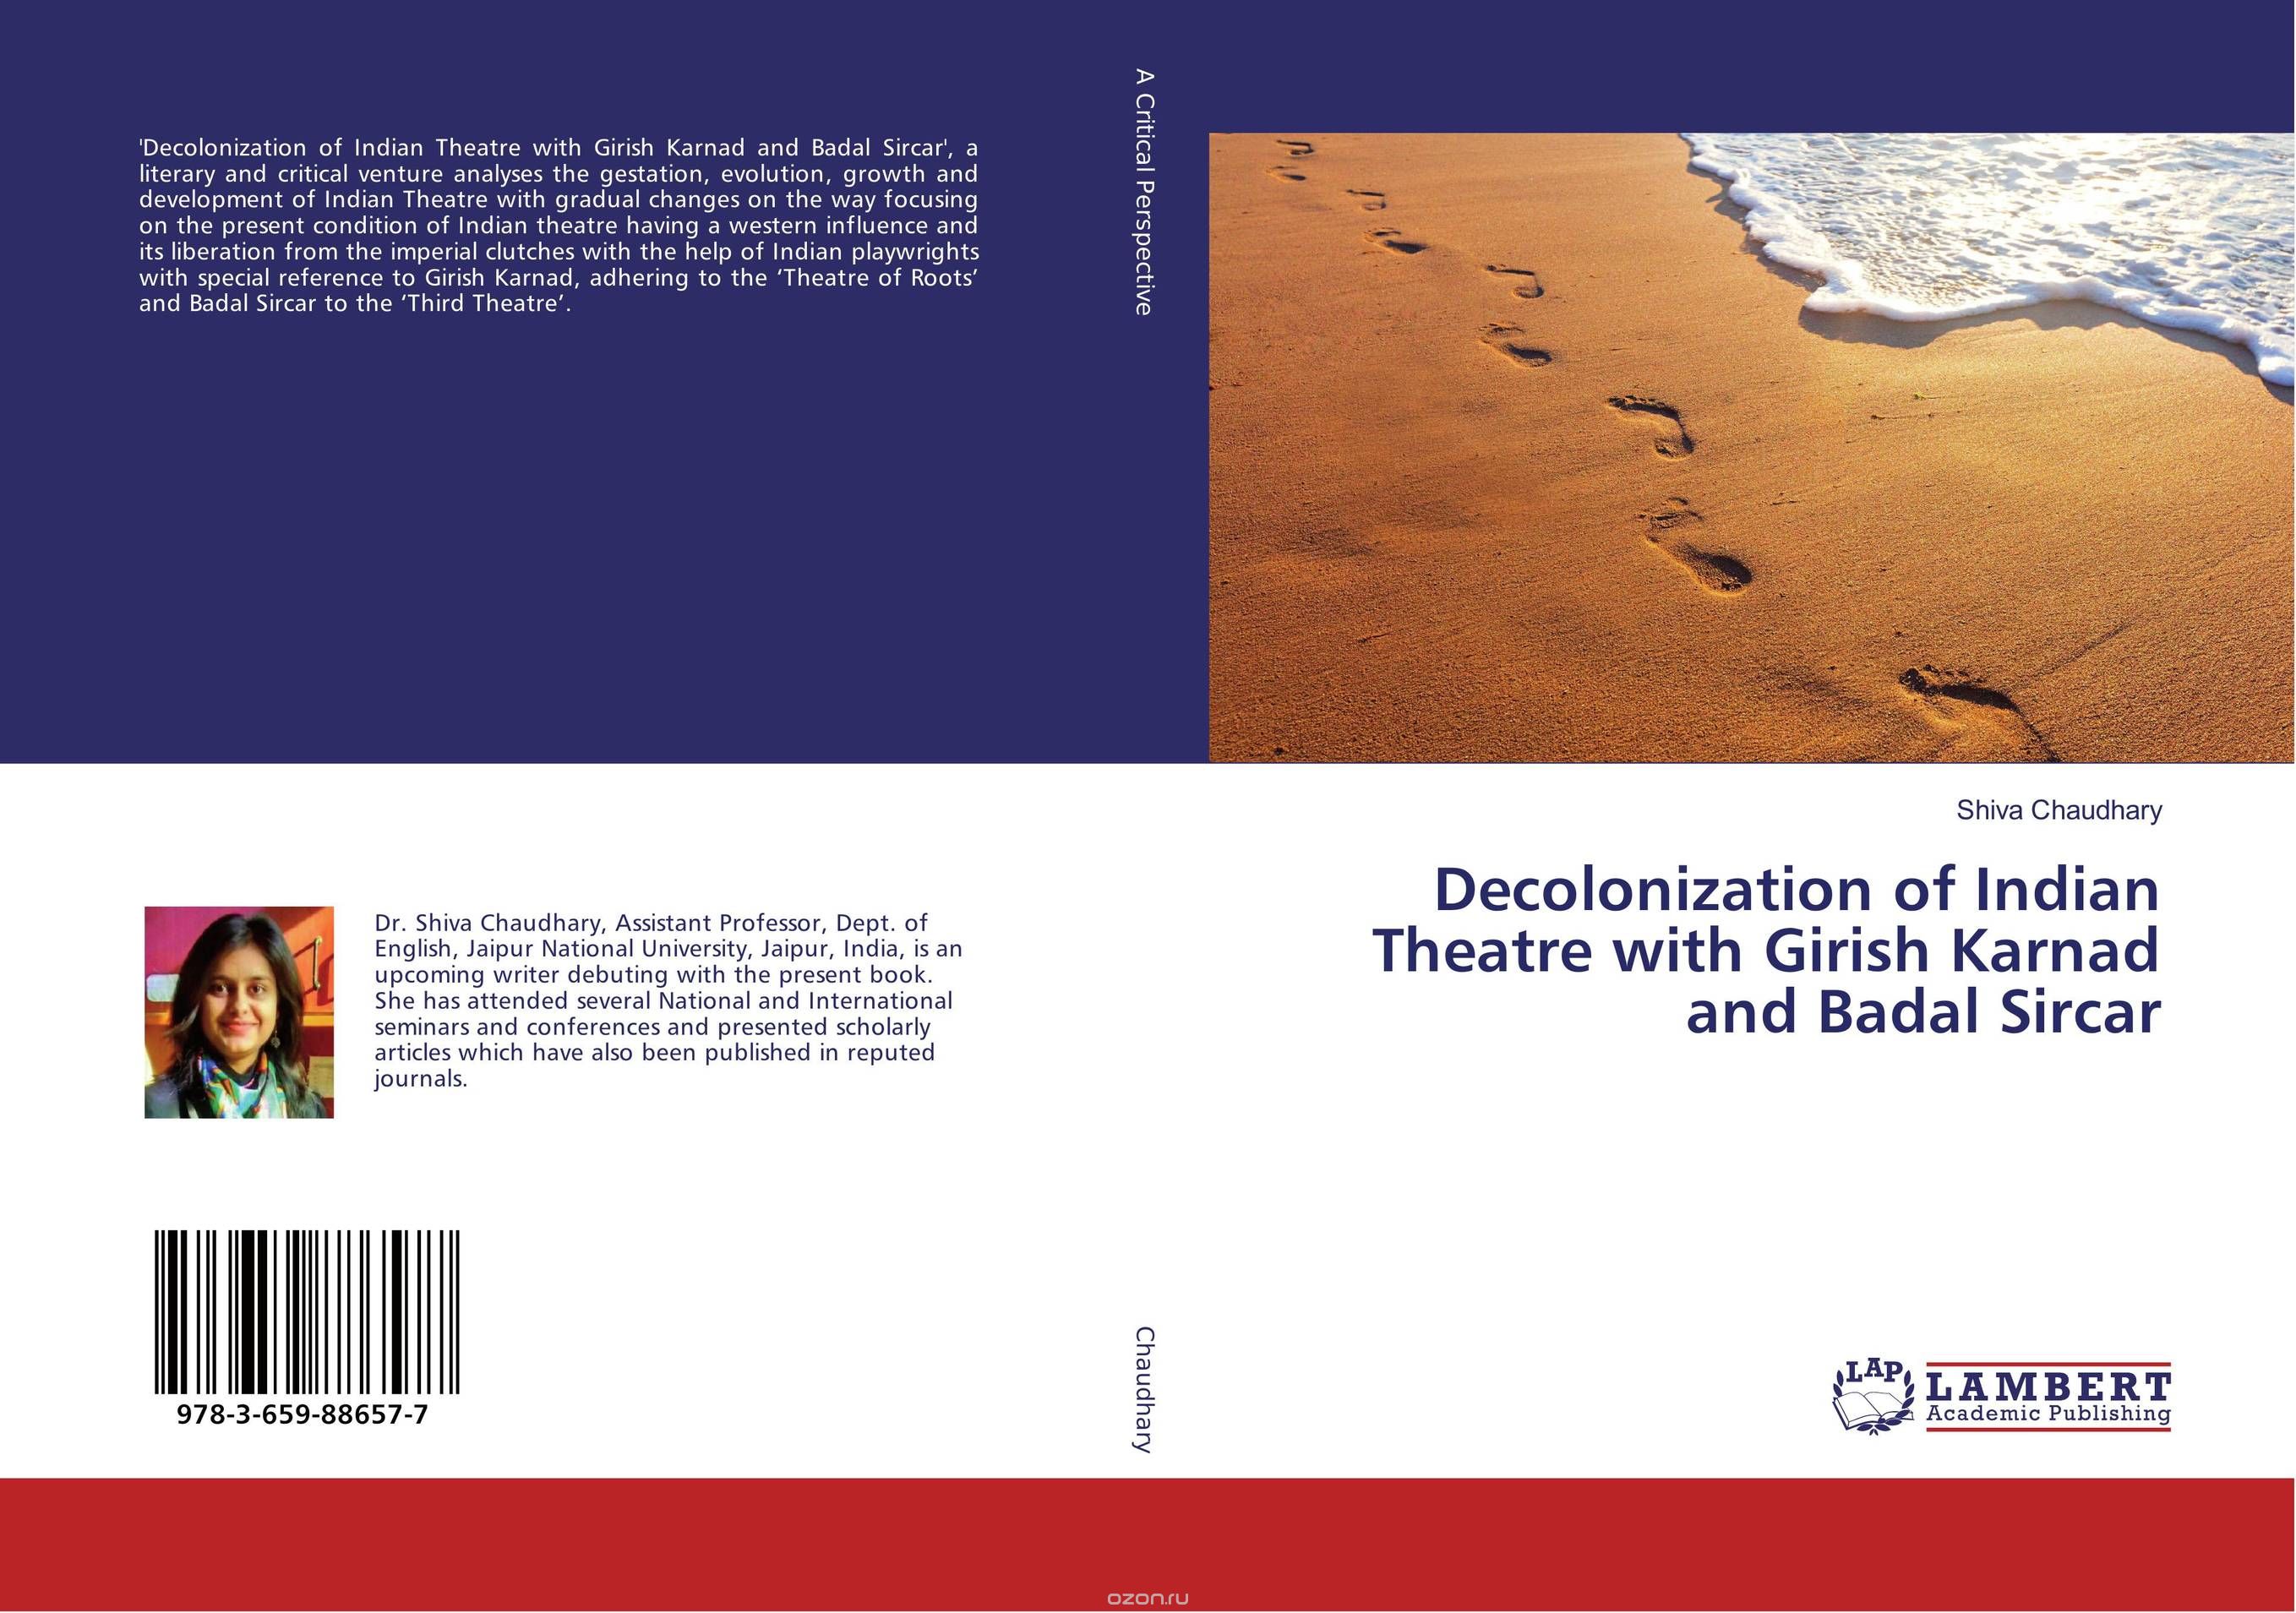 Скачать книгу "Decolonization of Indian Theatre with Girish Karnad and Badal Sircar"